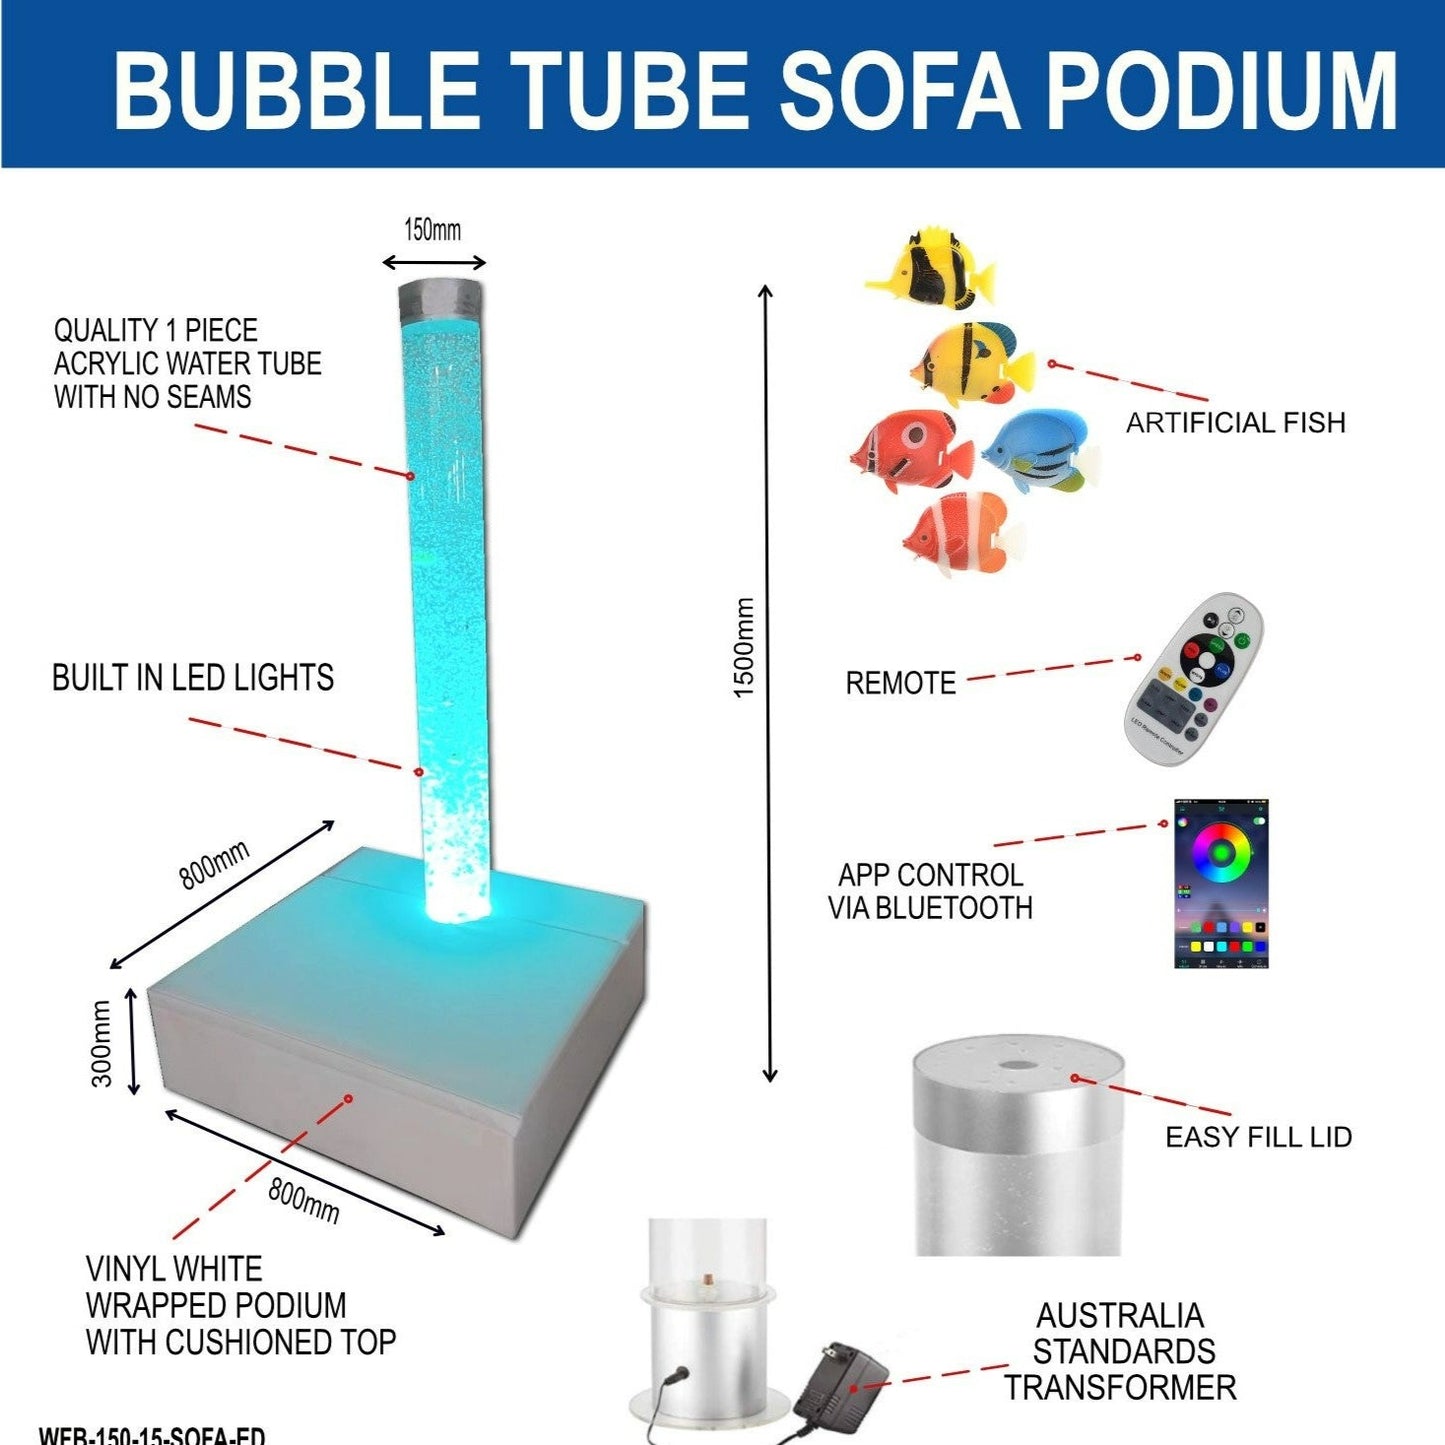 Bubble Tube Podium Specs